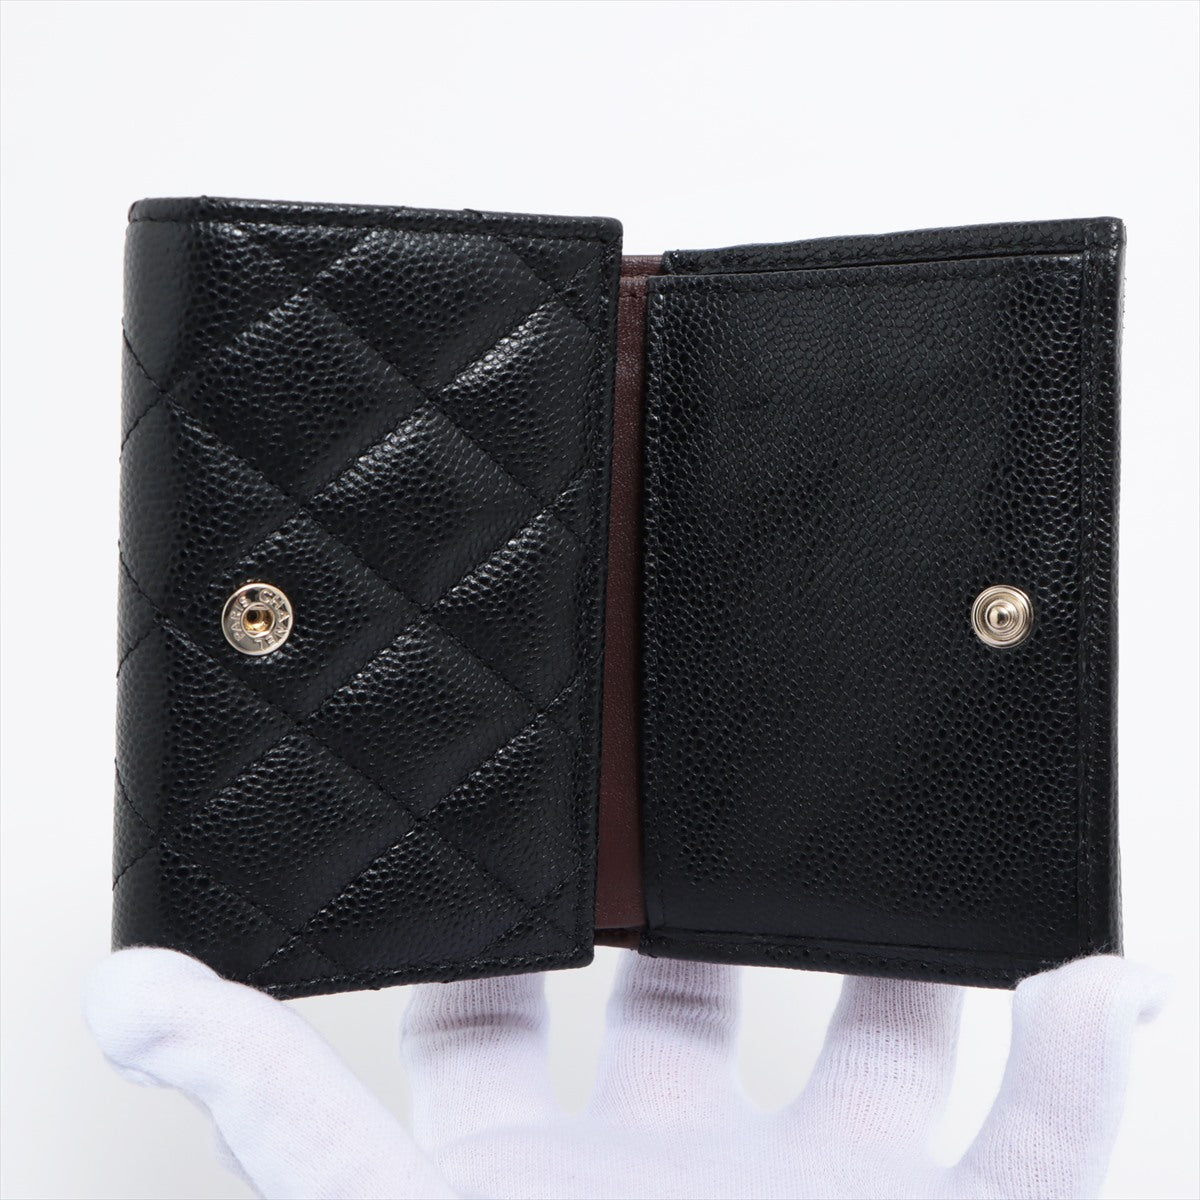 Chanel Matelasse Caviarskin Compact Wallet Black Gold Metal fittings random